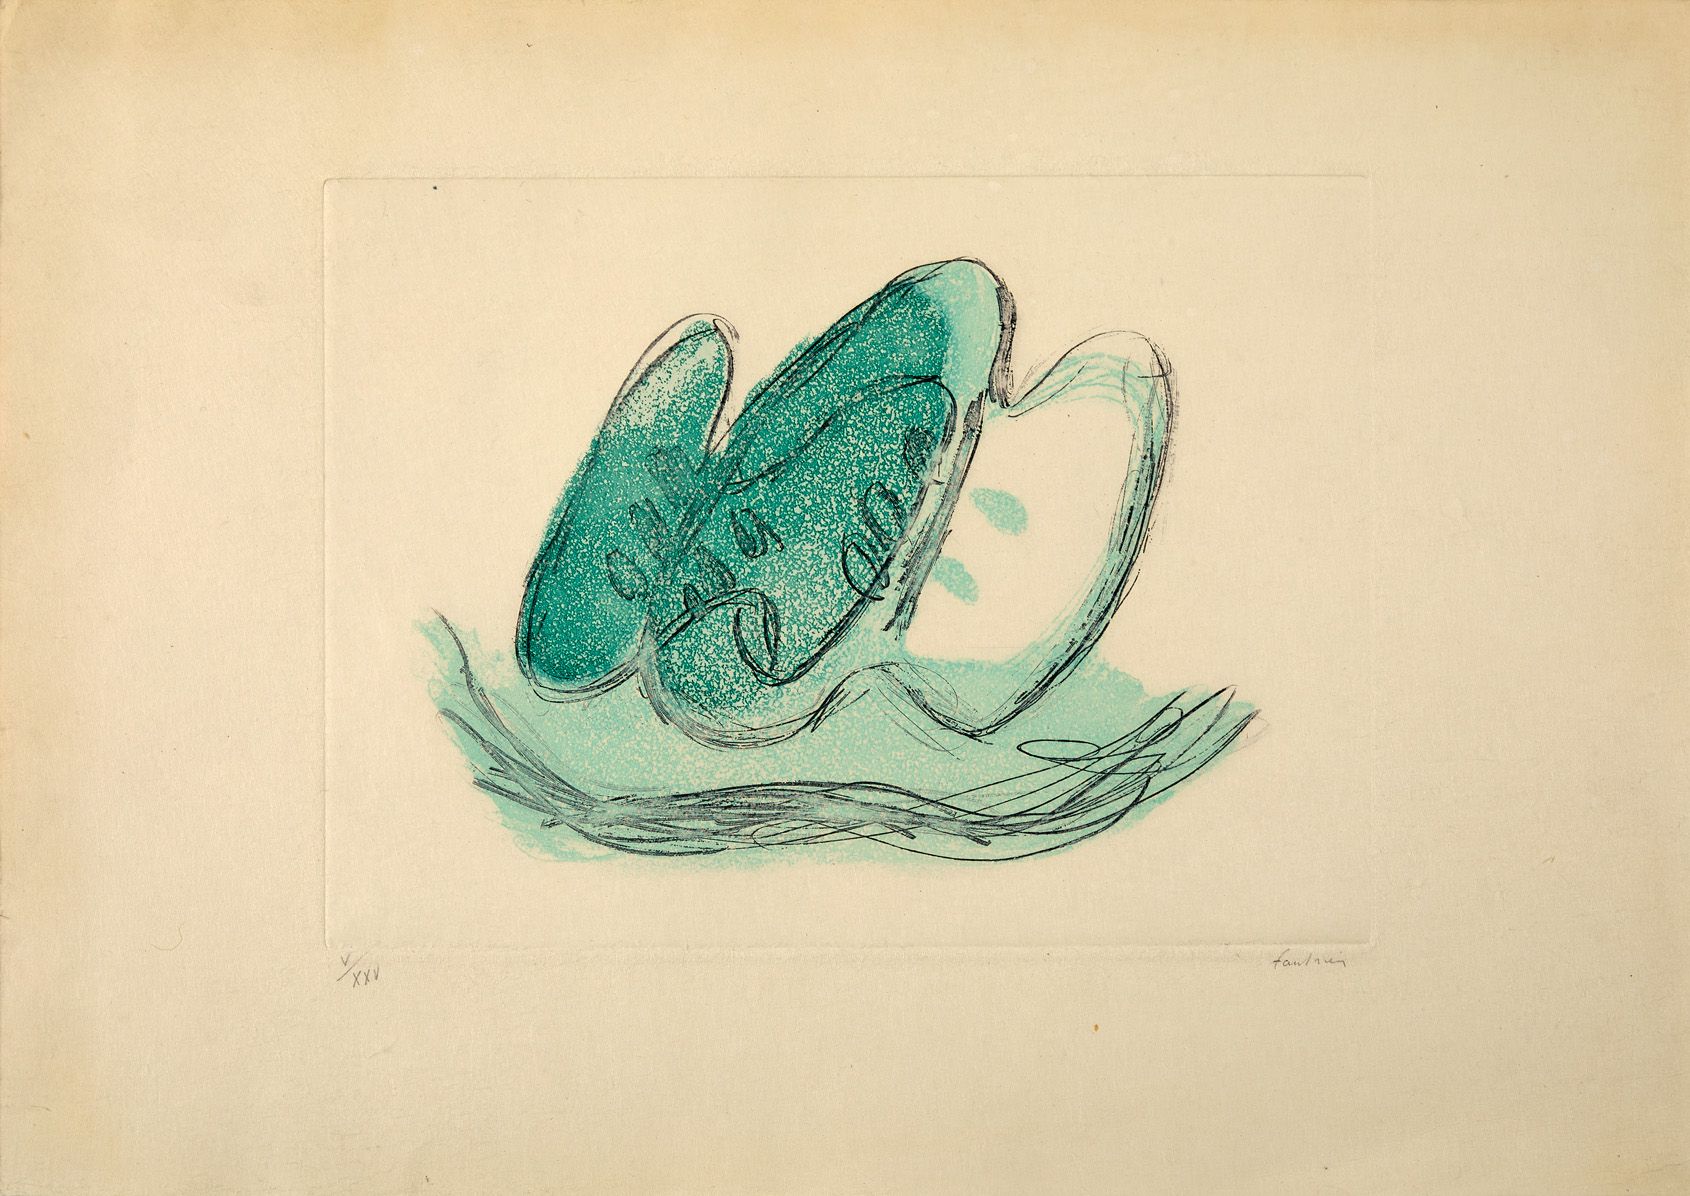 Jean FAUTRIER 让-福里埃 (1898 - 1964)

果实

旧日本上的彩色蚀刻画，右下角有V/XXV的签名。

高23,6 - 宽32,2厘米&hellip;